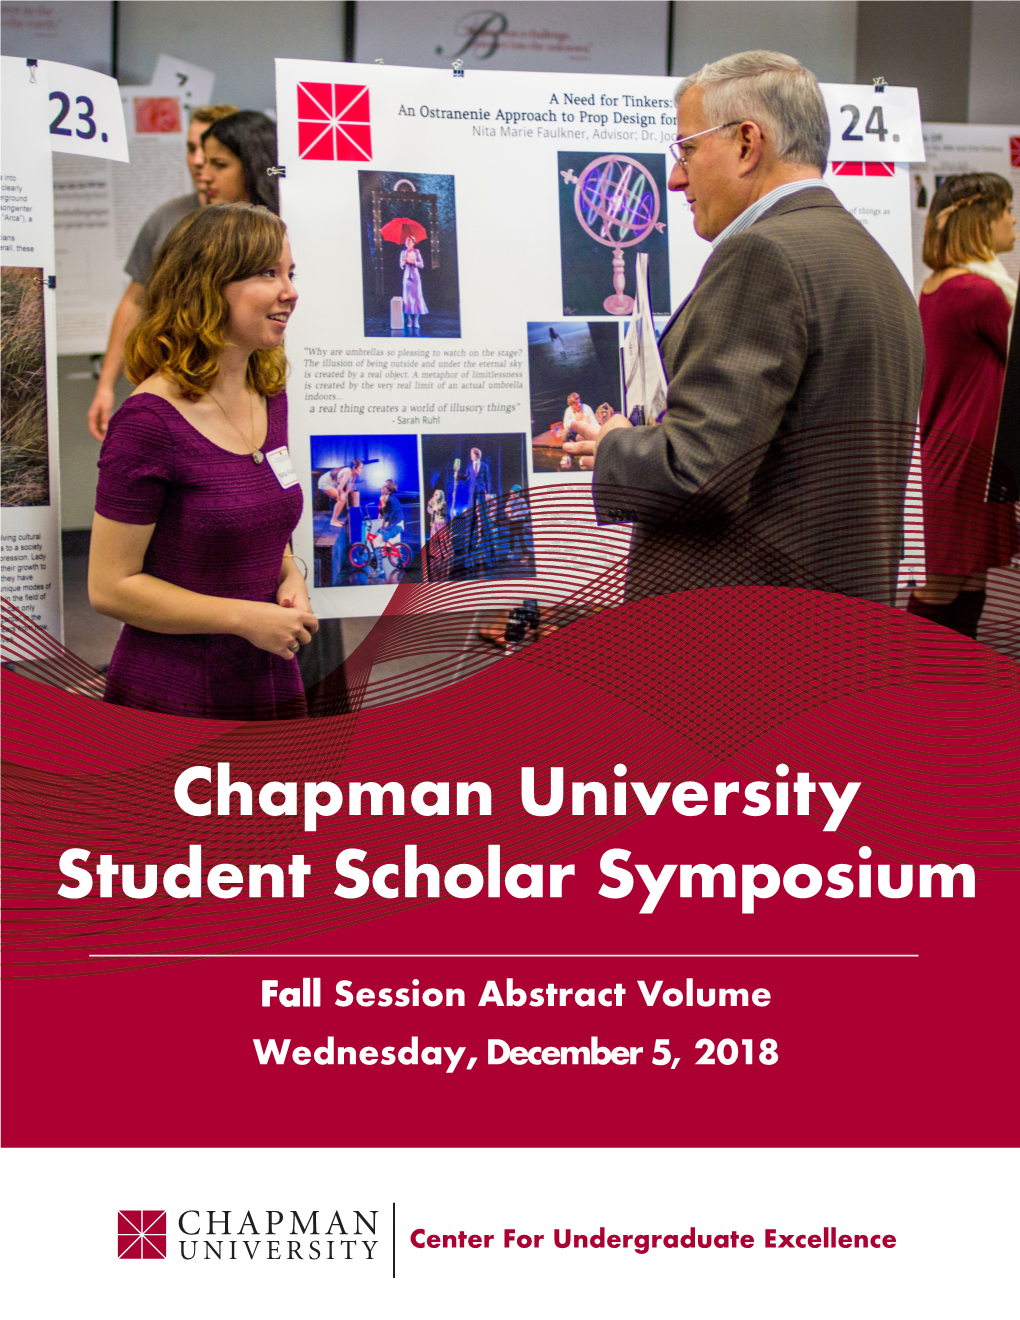 Chapman University Student Scholar Symposium